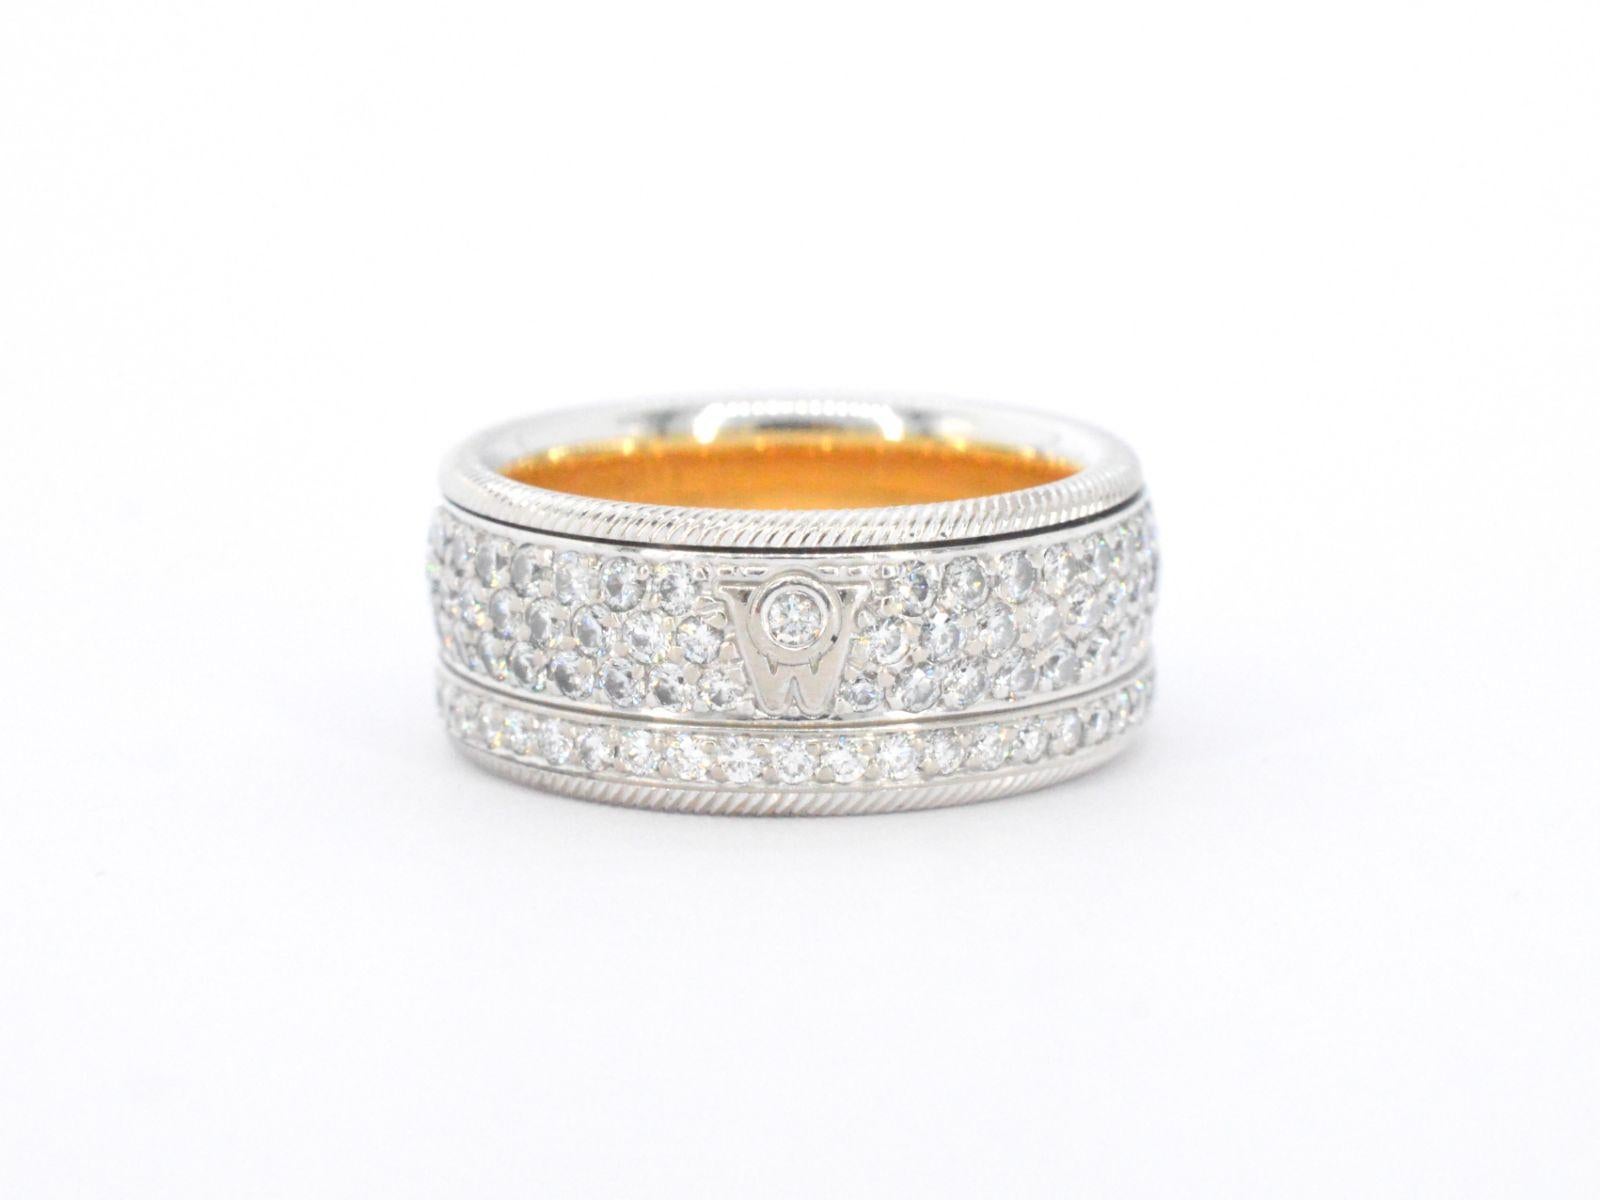 Brilliant Cut Wellendorff, Golden Ring Entirely Set with Diamonds